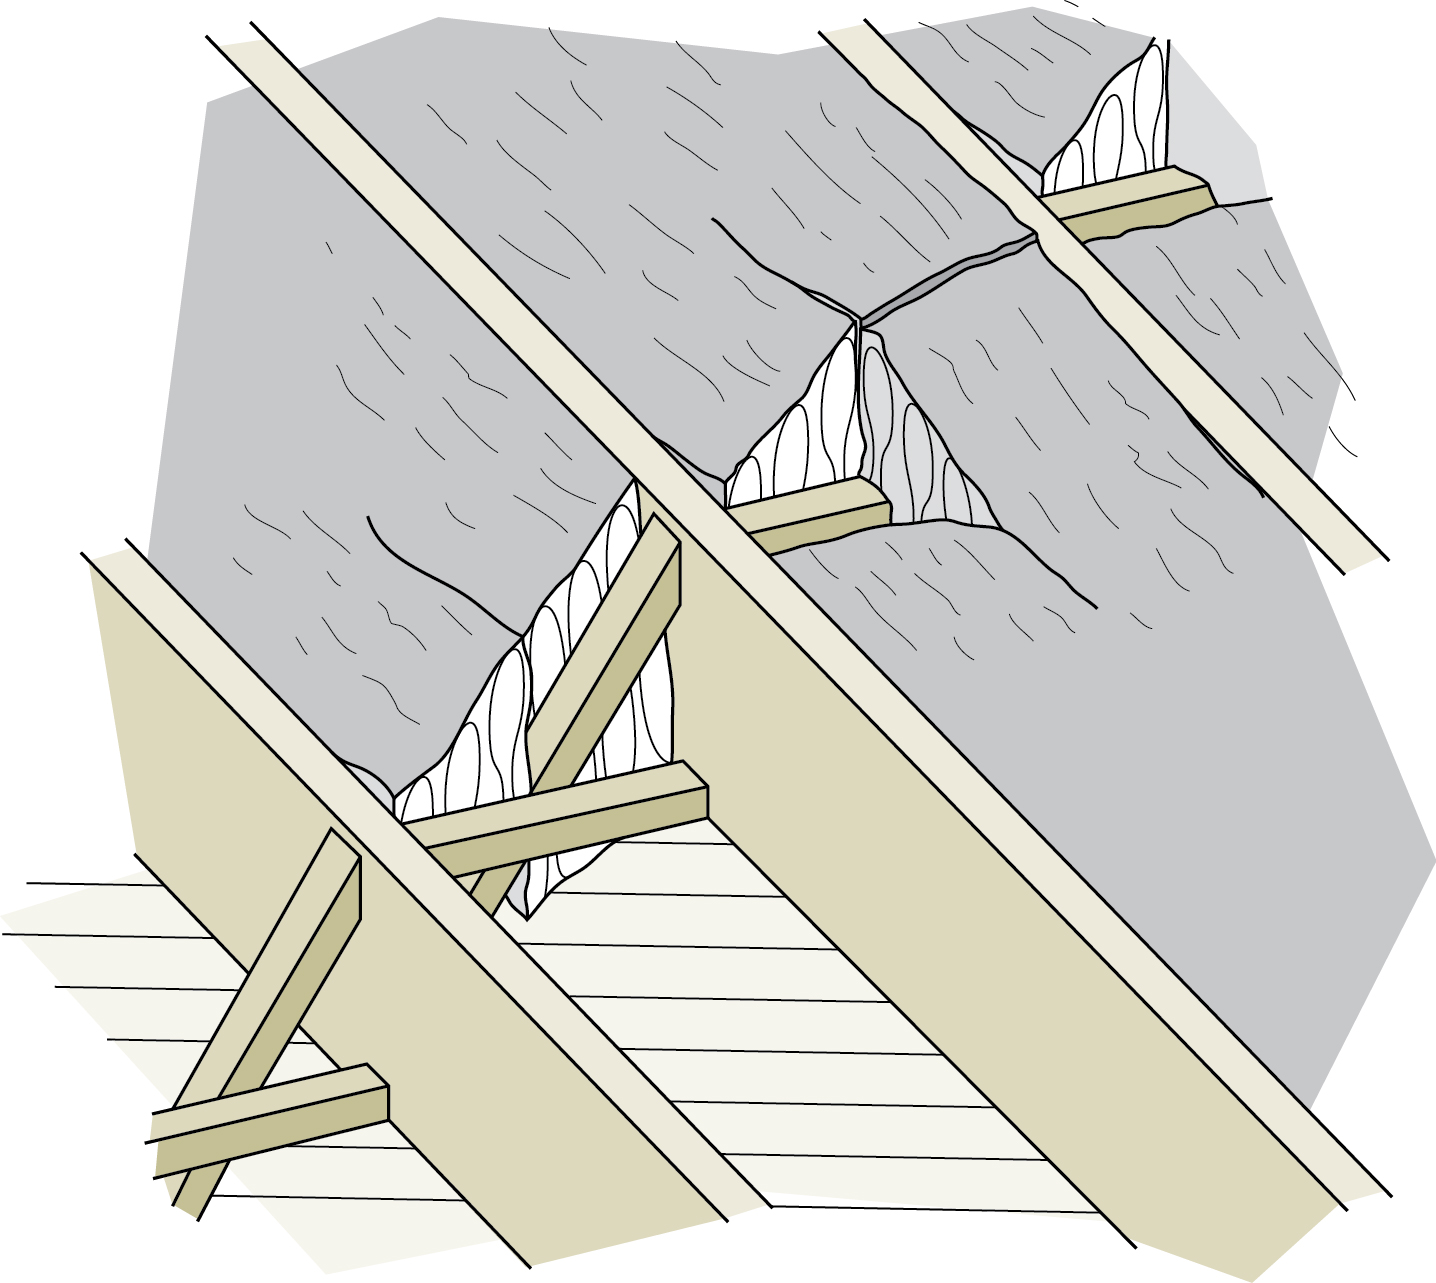 Figure 5-12 Fitting insulation around cross bracing